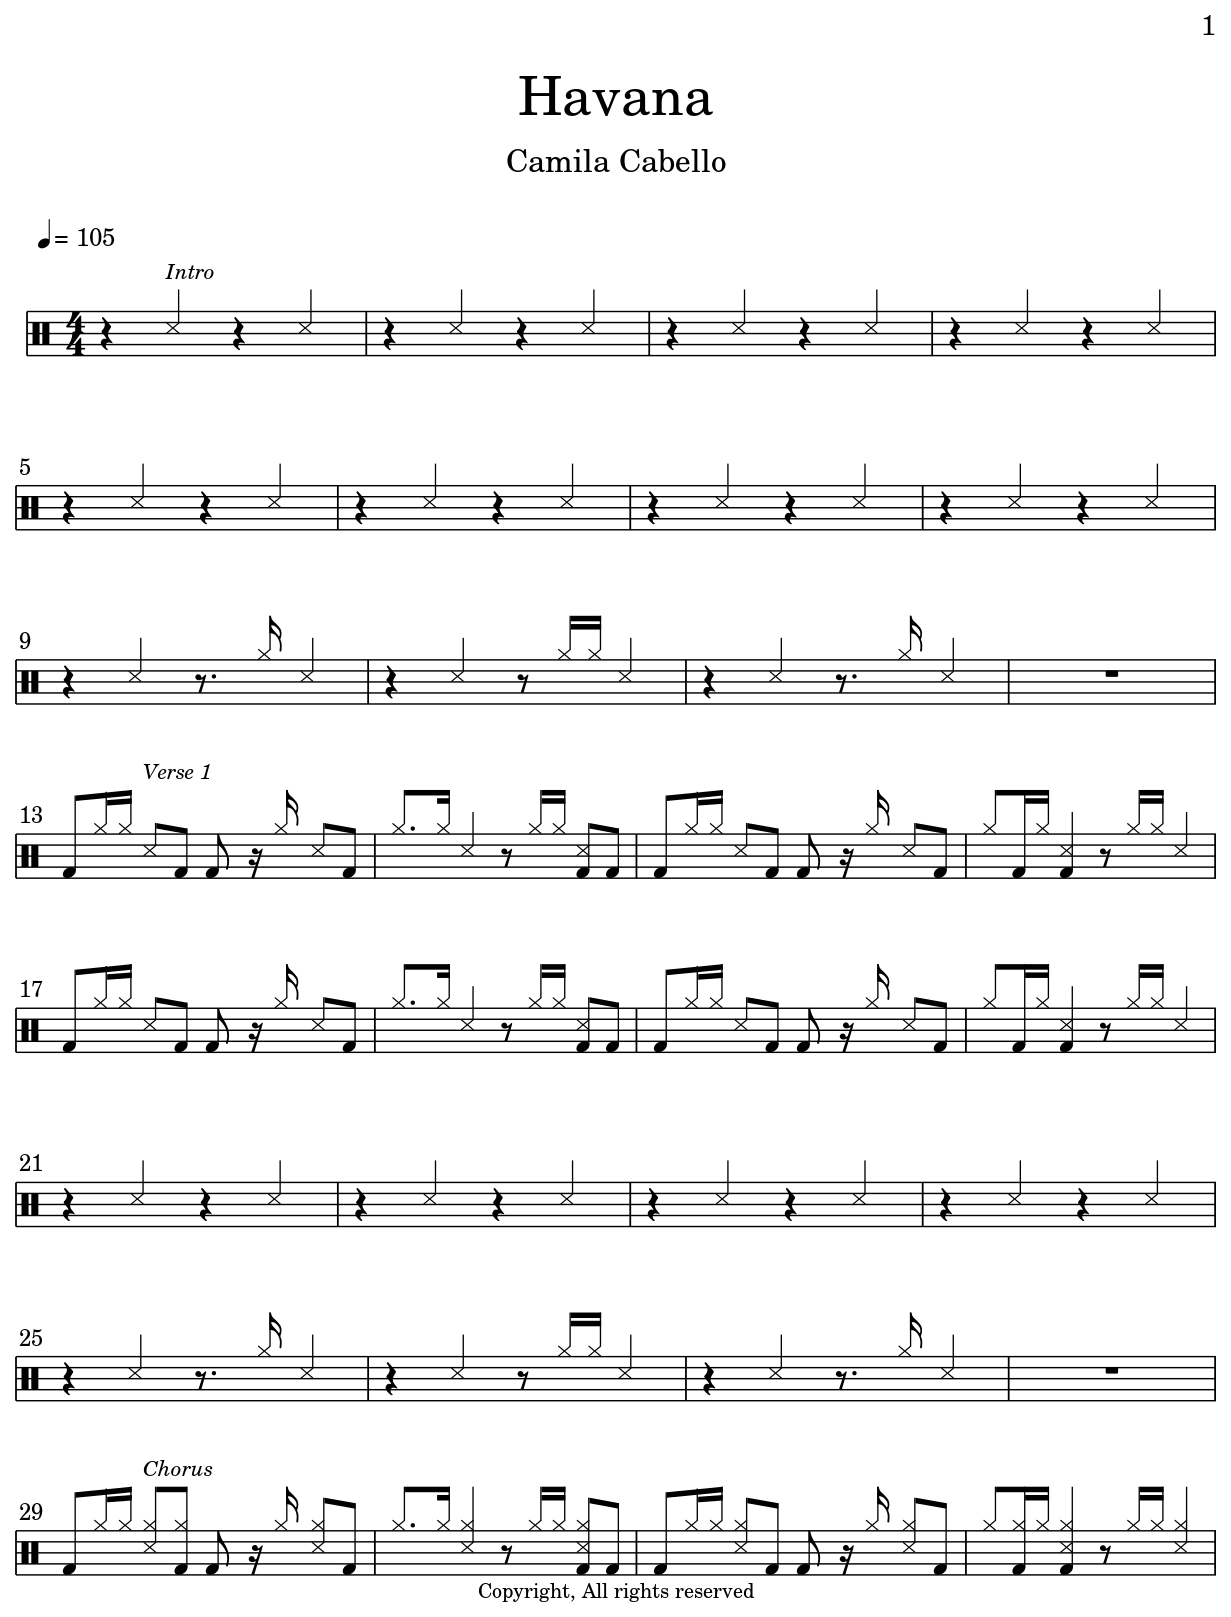 Havana - Sheet music for Drum Set1138 x 1673